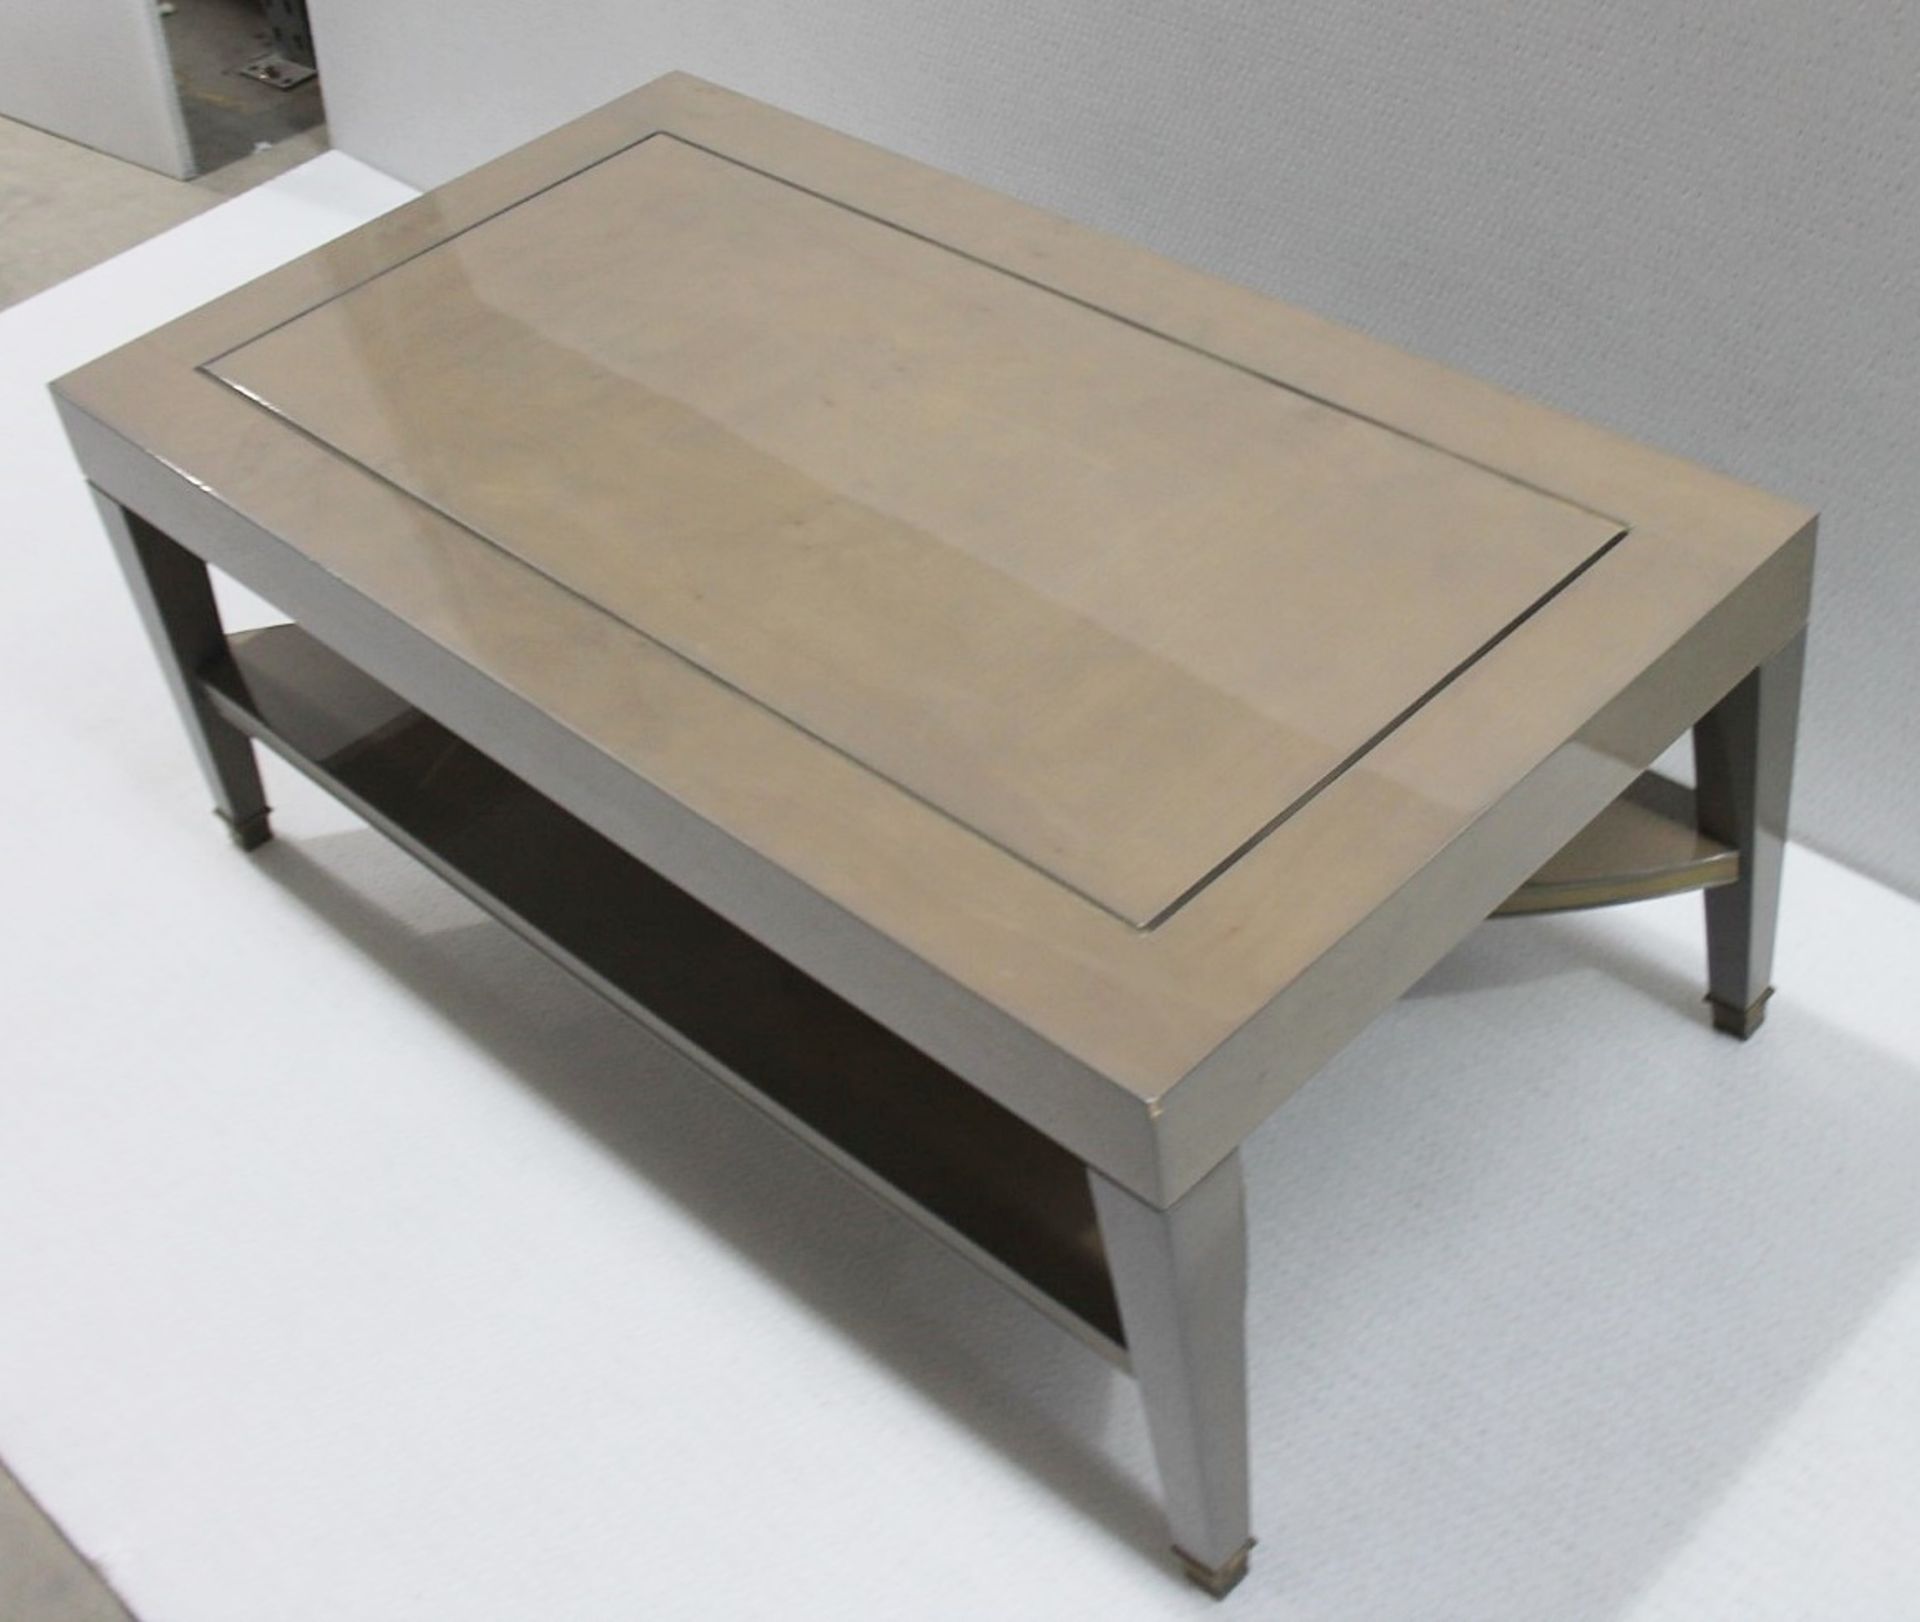 1 x JUSTIN VAN BREDA 'Legacy Alexander' Designer Lacquered Coffee Table With Undershelf - RRP £5,000 - Image 6 of 9